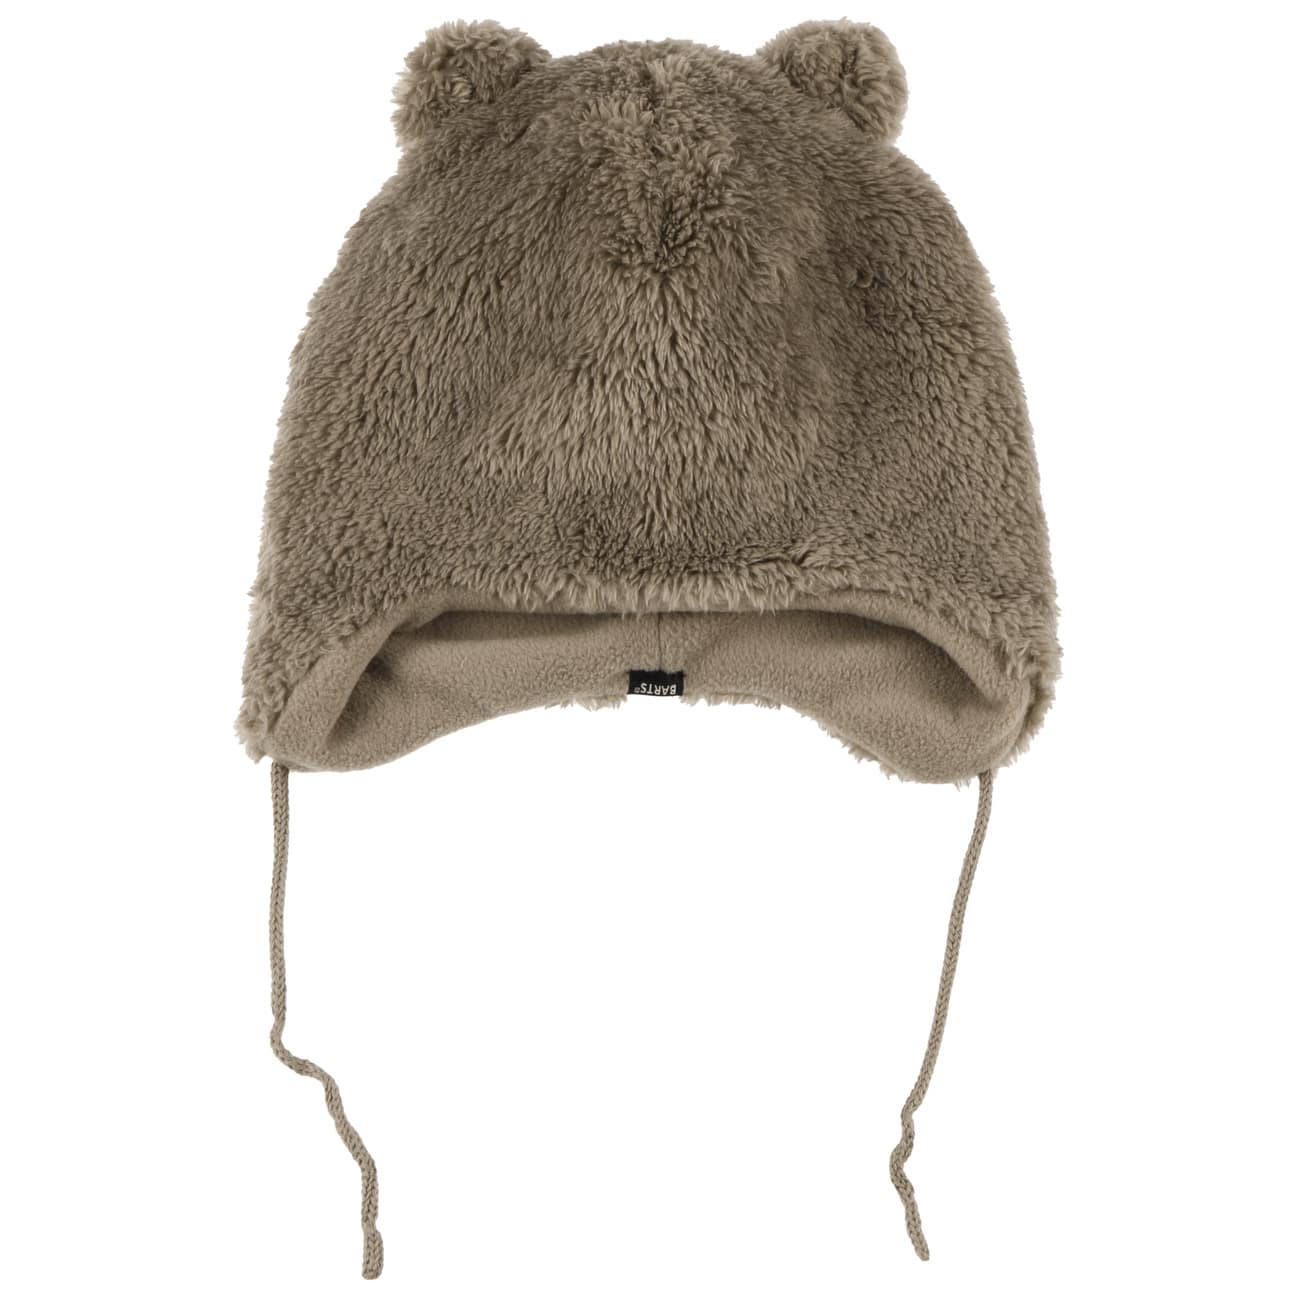 Noa Bear Kids Winter Hat by Barts, EUR 16,99 --> Hats, caps & beanies ...